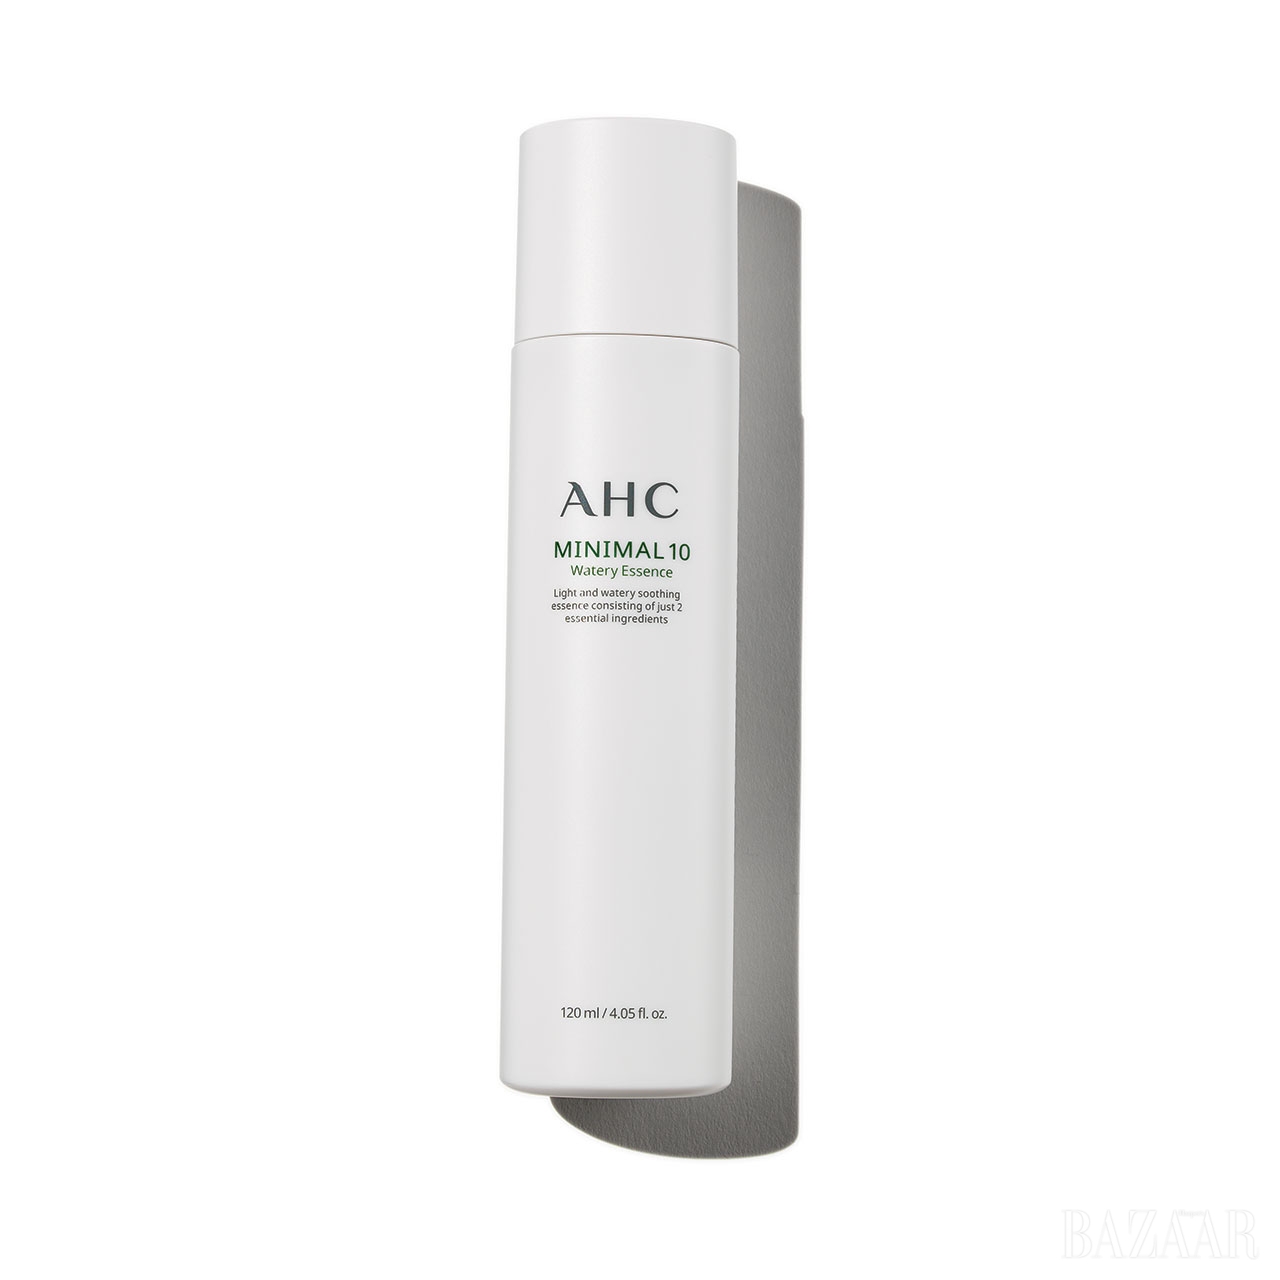 Ahc 미니멀 10 워터리 에센스 병풀 추출물 순수 원액을 포함한 단 2가지 성분으로 피부 본연의 힘을 강화해준다. 3만2천원.